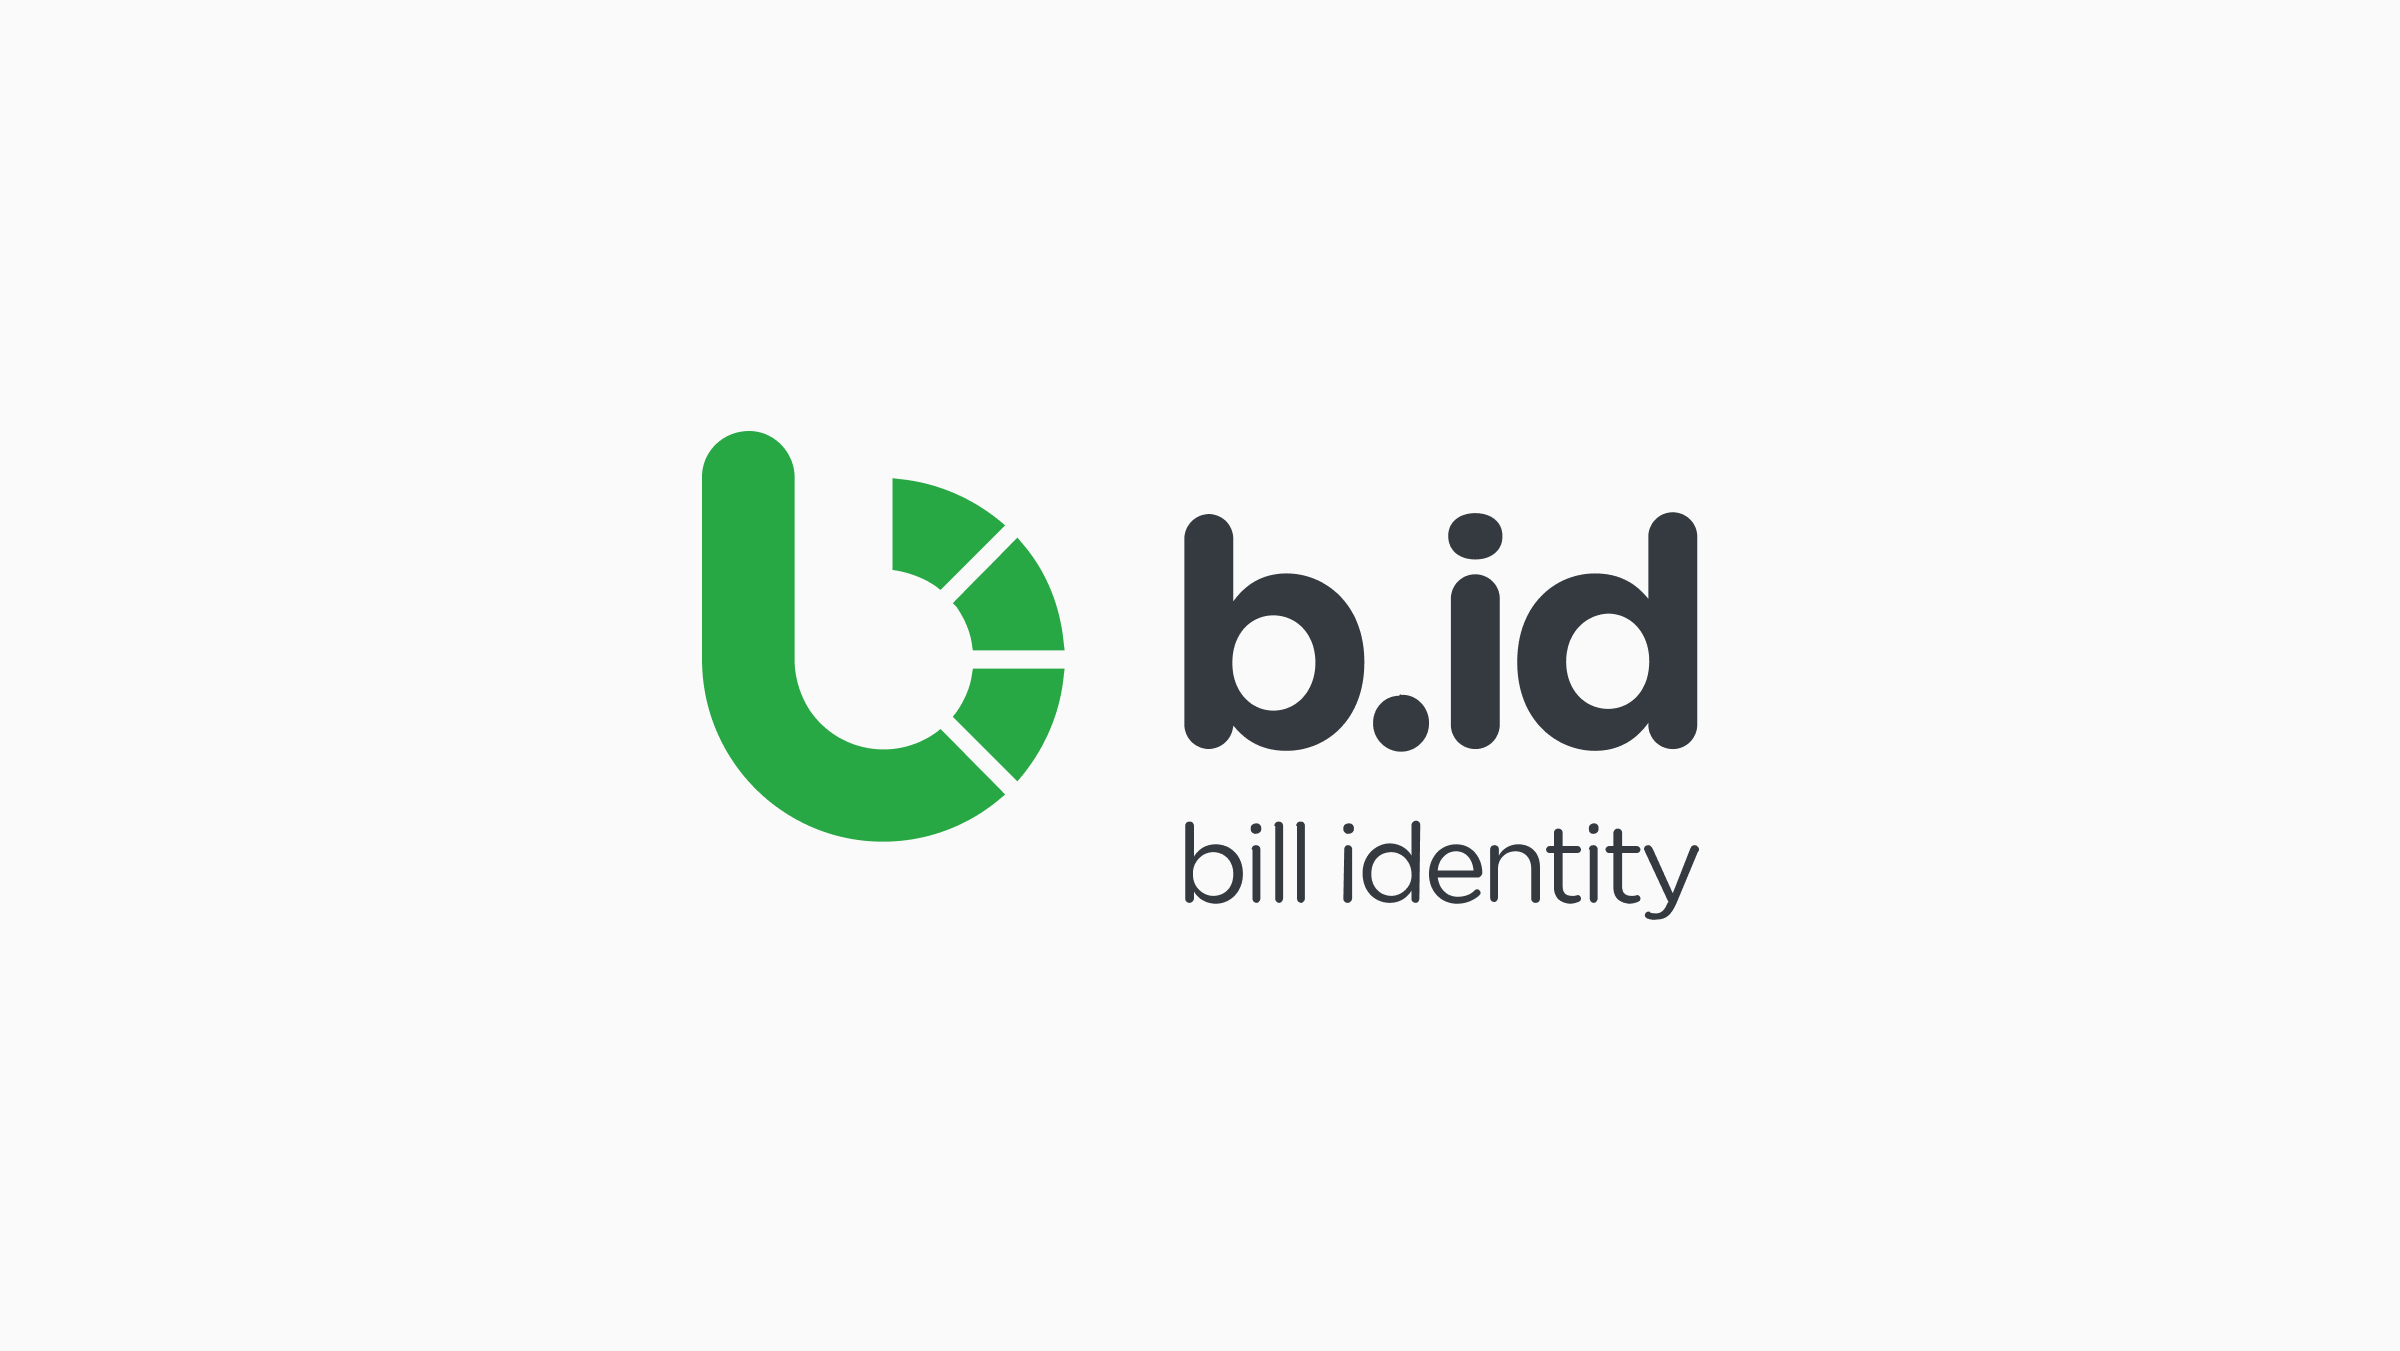 The Bill Identity logo